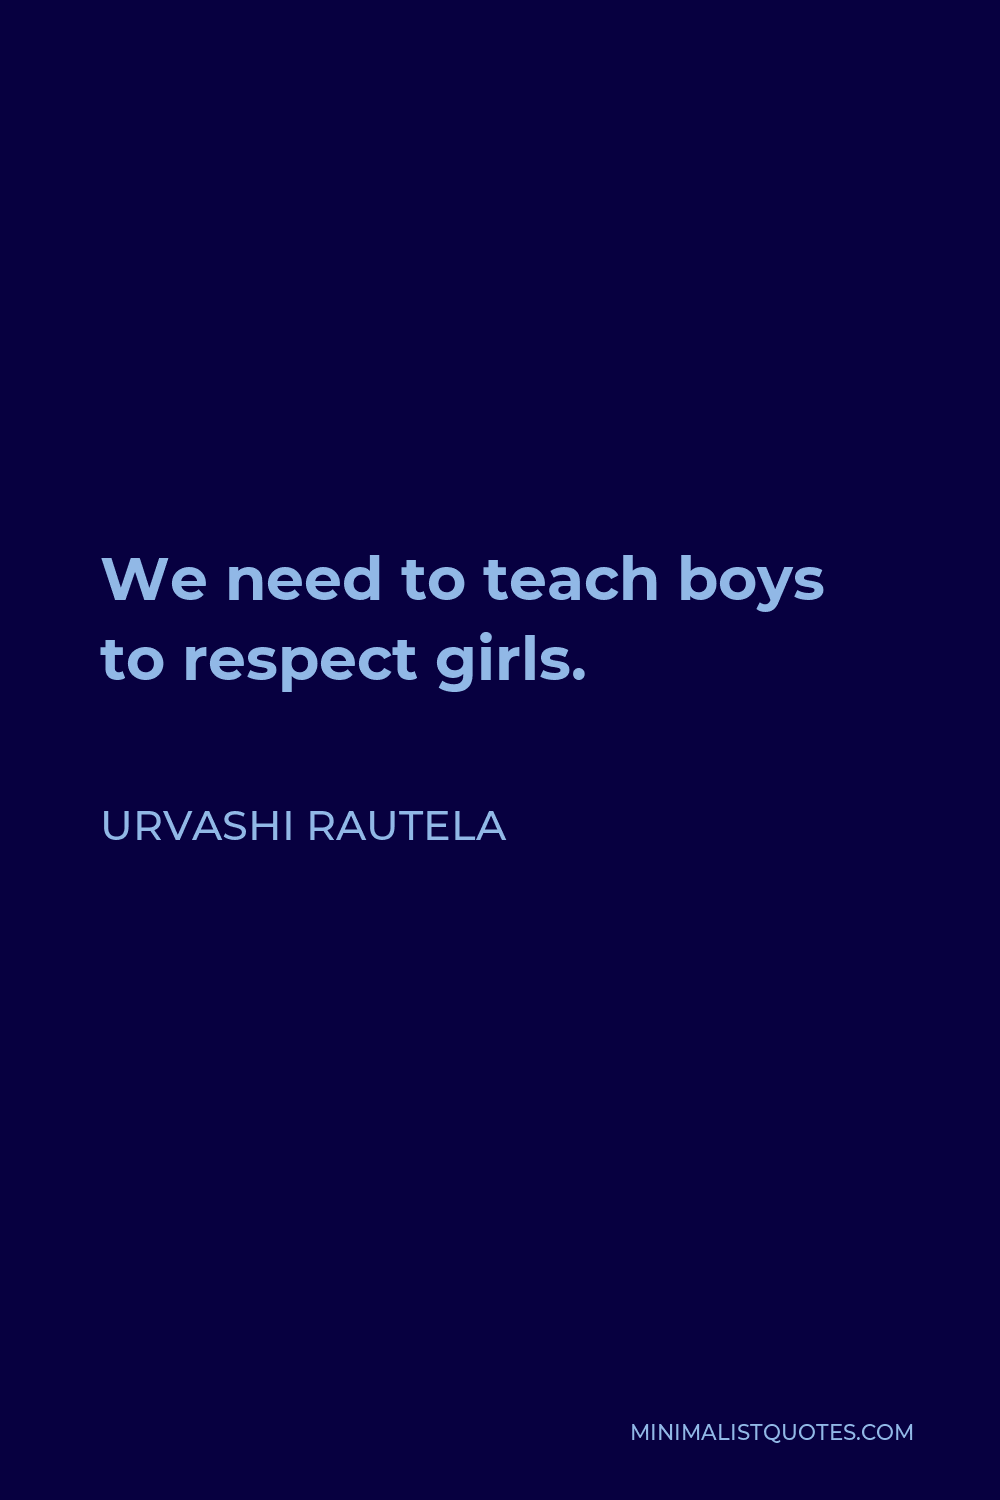 Urvashi Rautela Quote - We need to teach boys to respect girls.